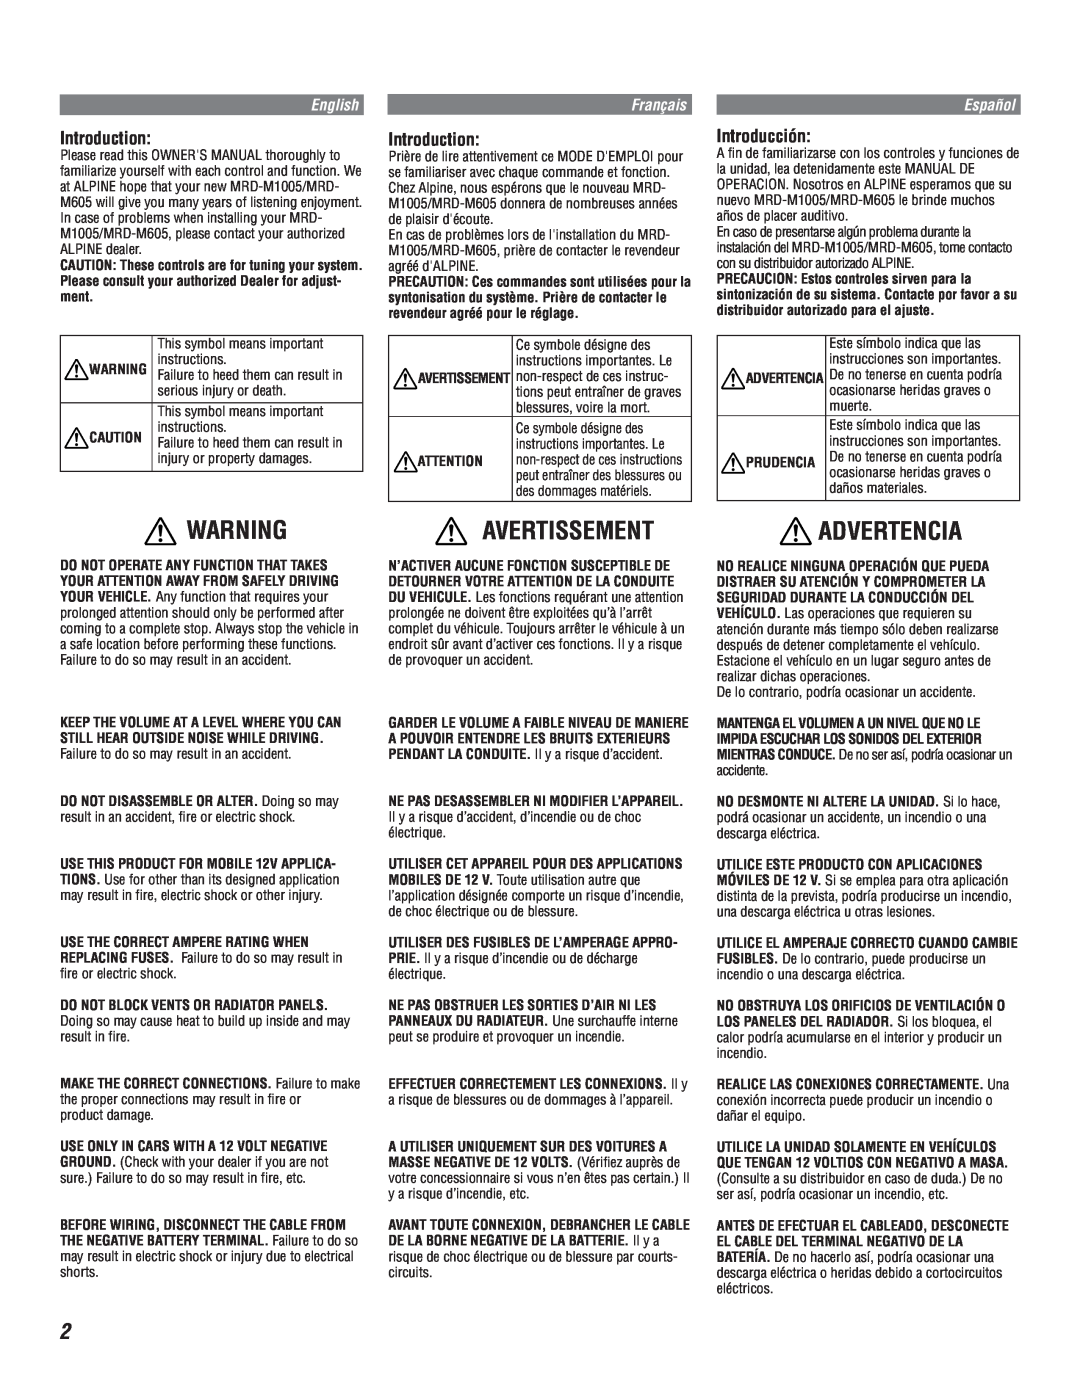 Alpine MRD-M1005 owner manual Avertissement, Advertencia, English, Français, Español 